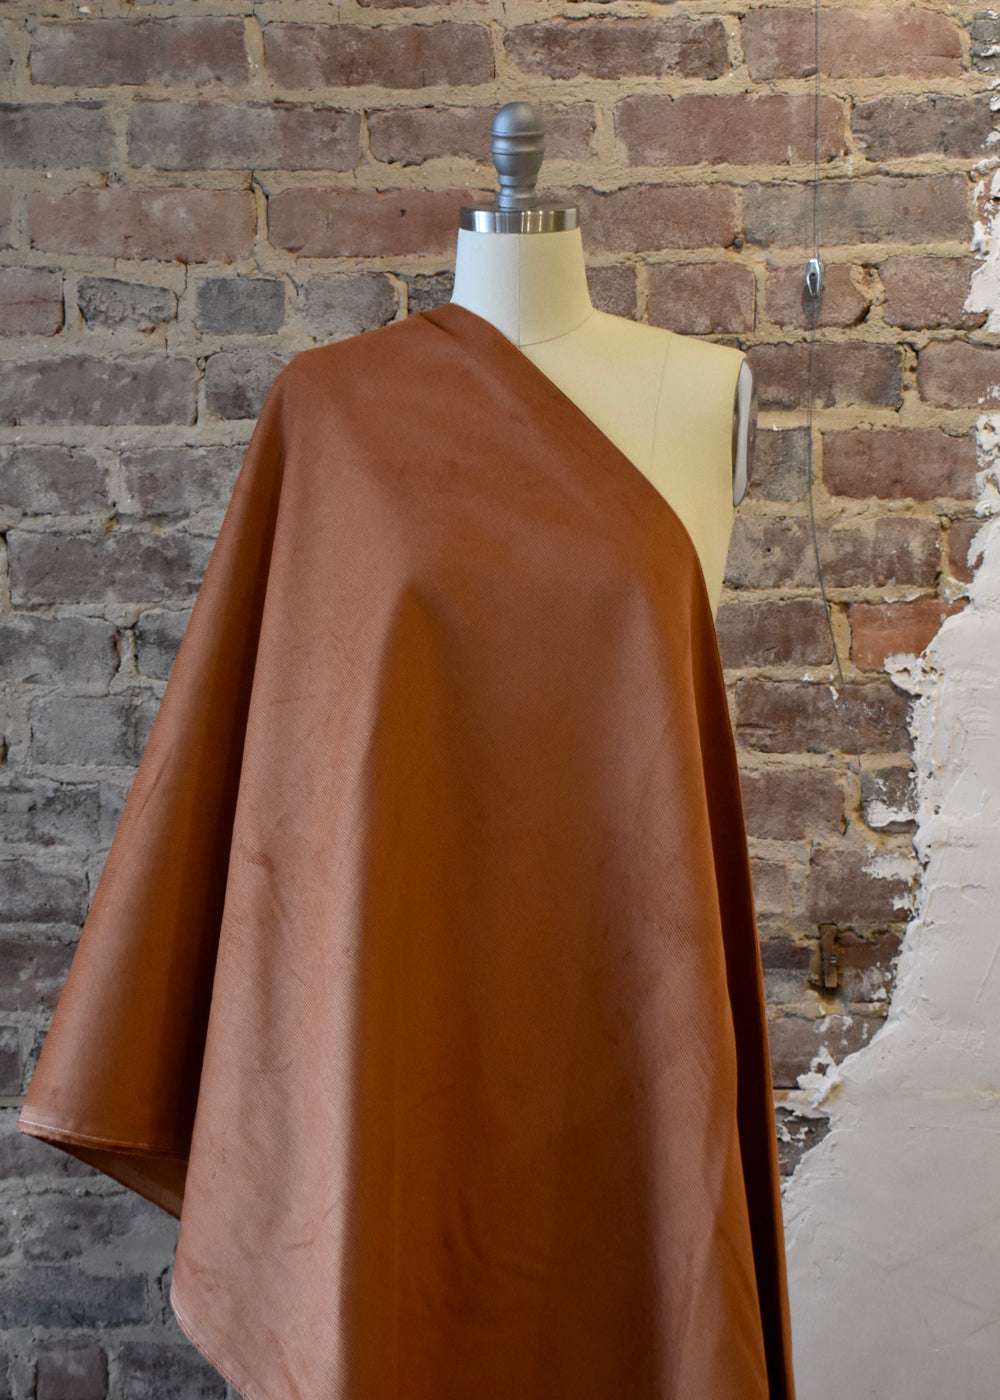 Dark Brown Corduroy 100% Cotton Fabric – Fabrics4Fashion